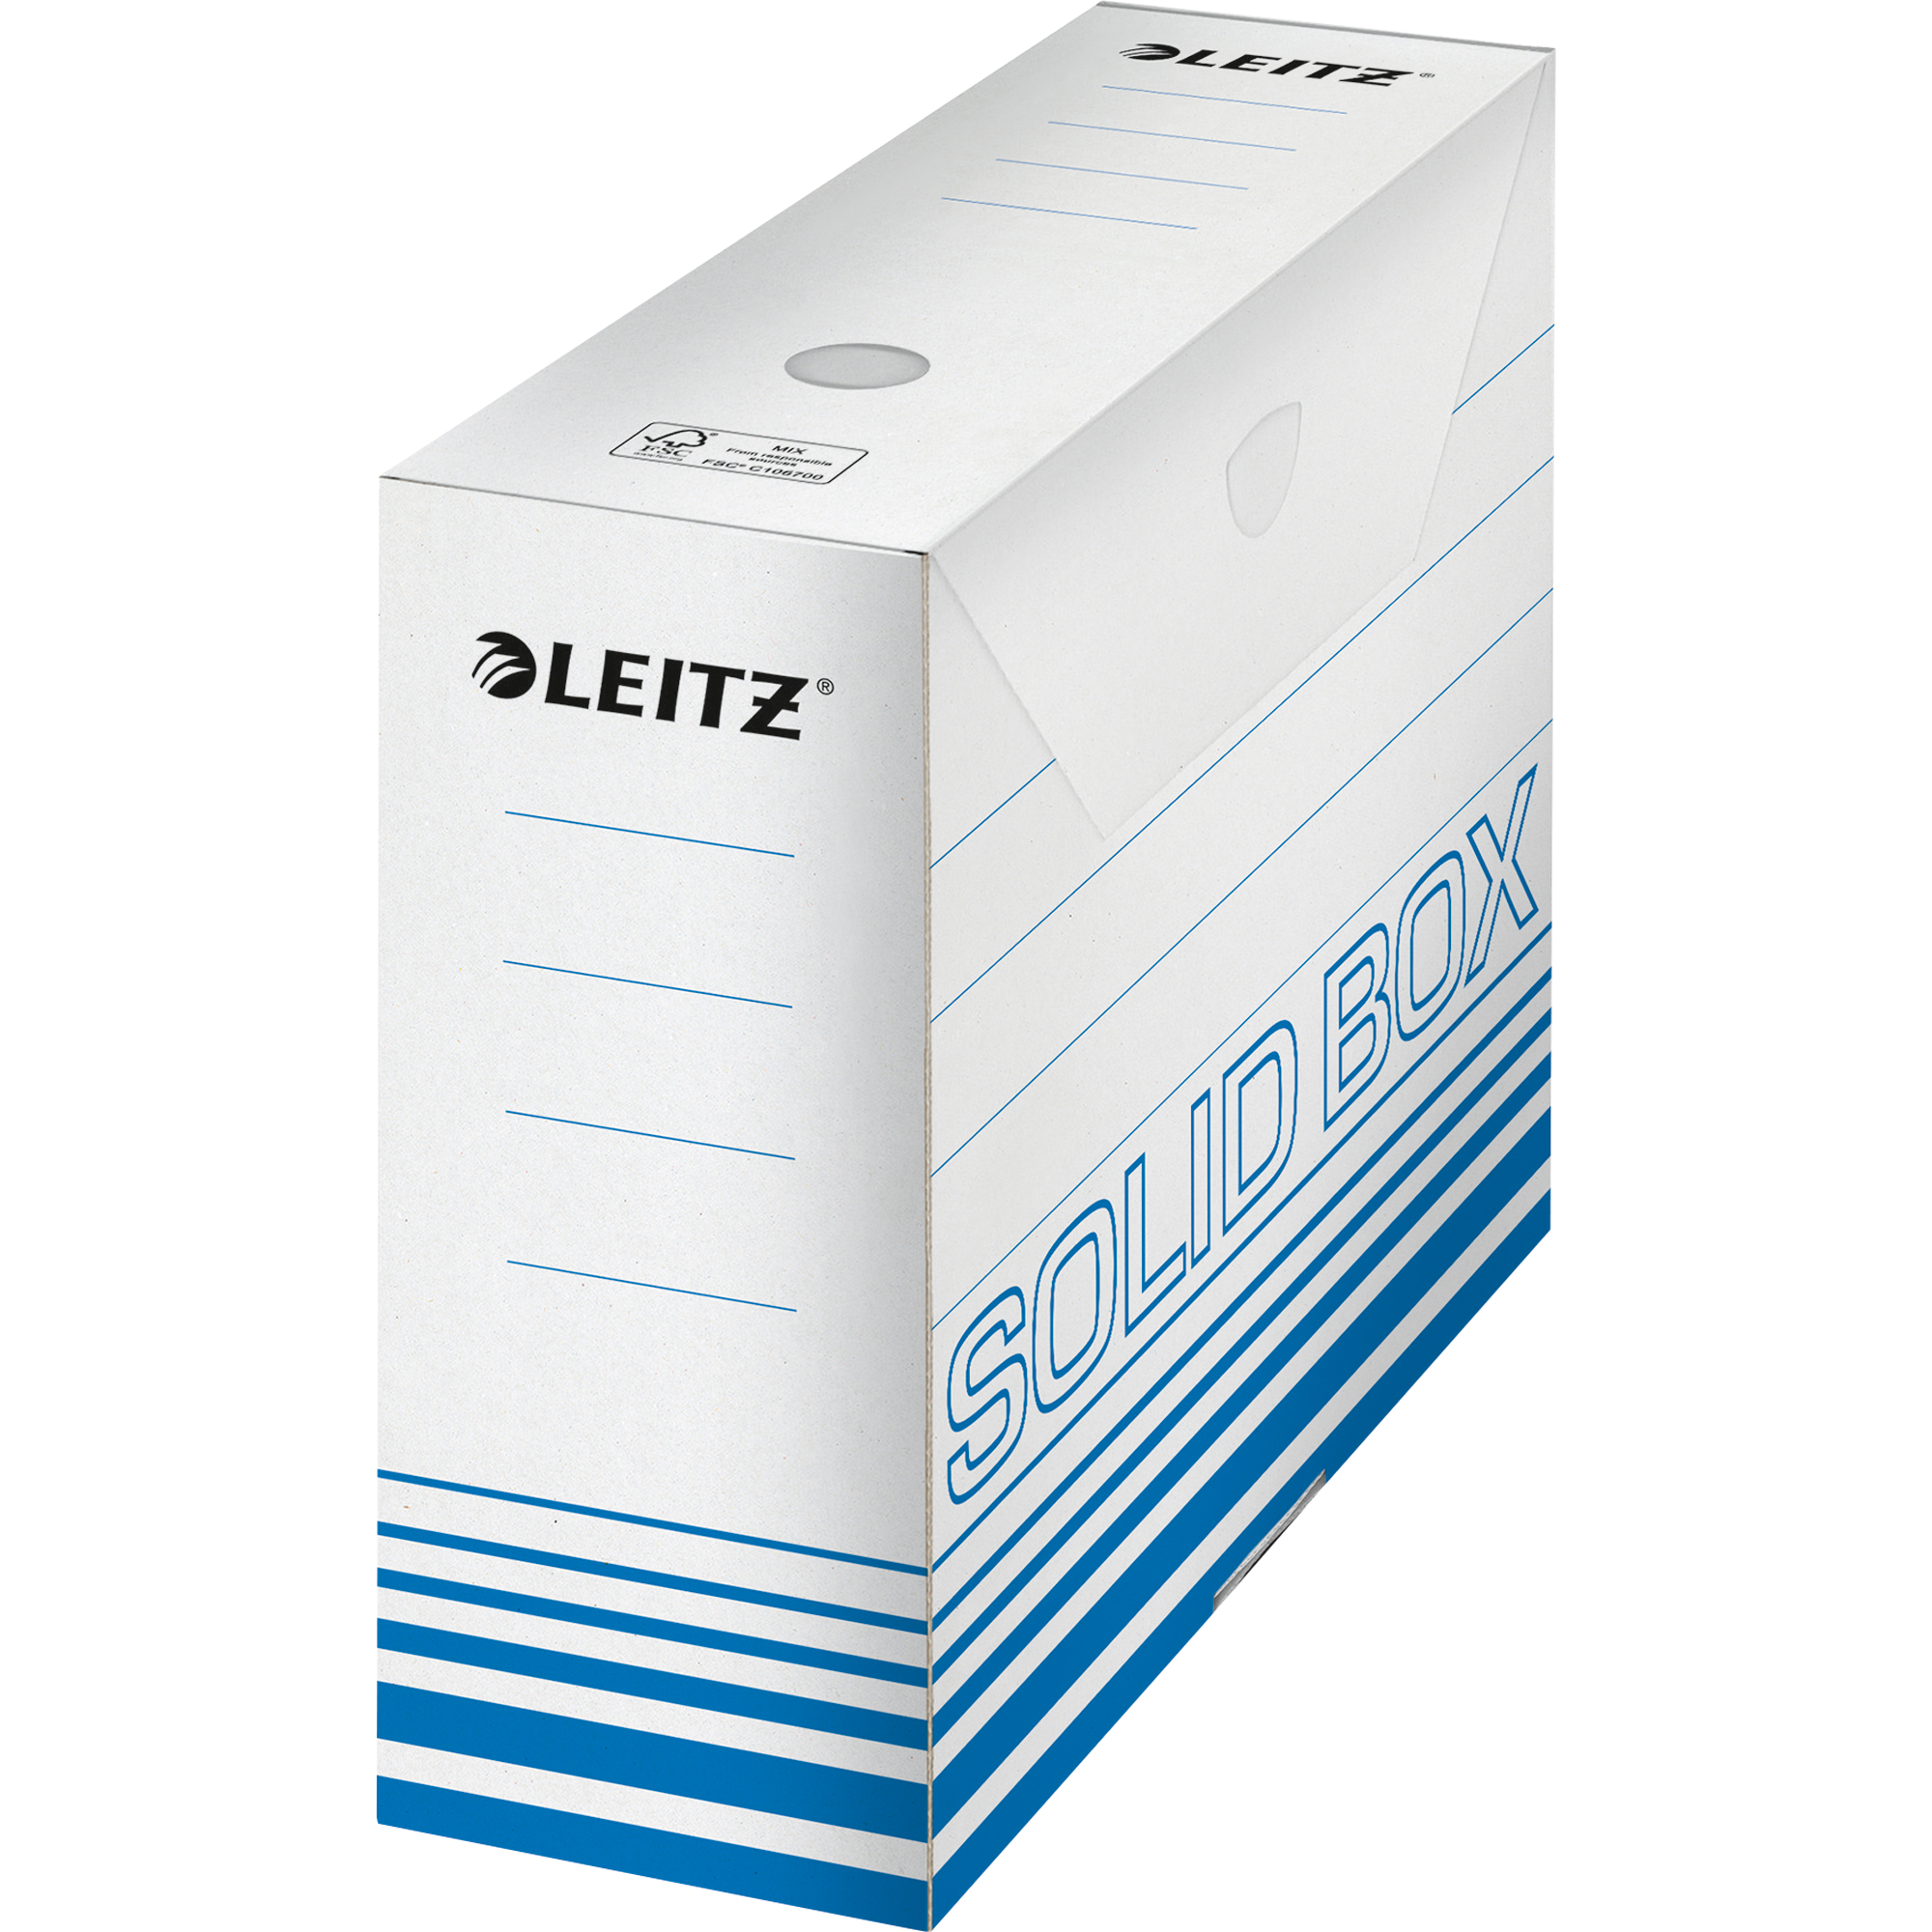 Leitz Archivschachtel Solid 10 x 25,7 x 33 cm weiß, hellblau